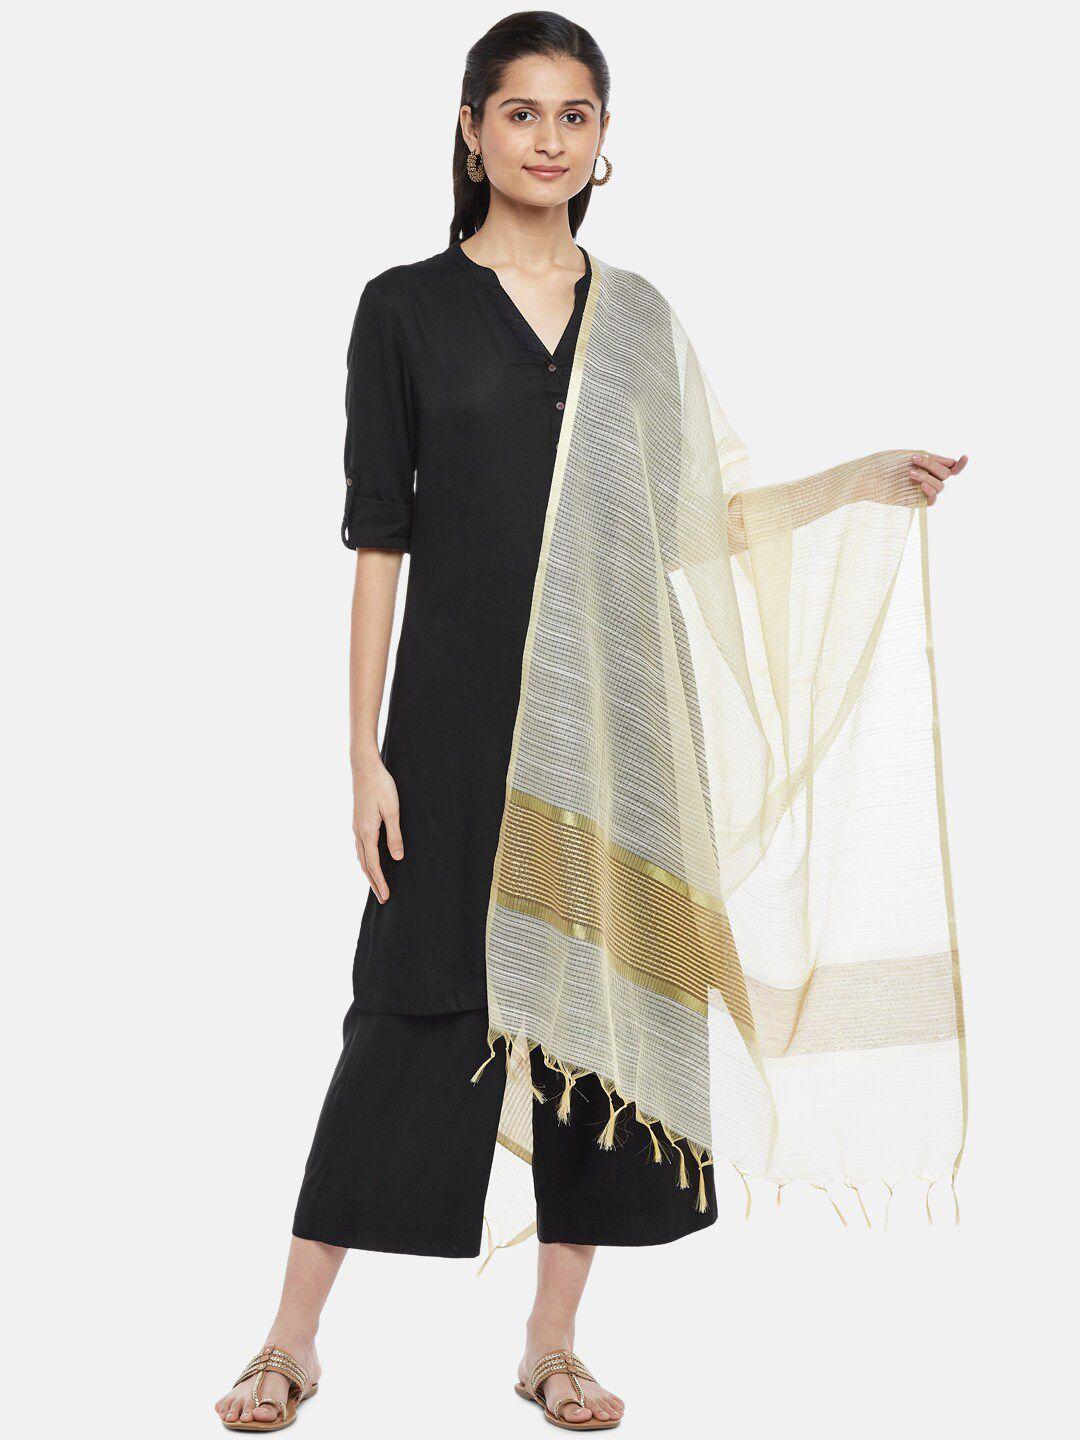 rangmanch by pantaloons women off white & gold-toned woven design dupatta